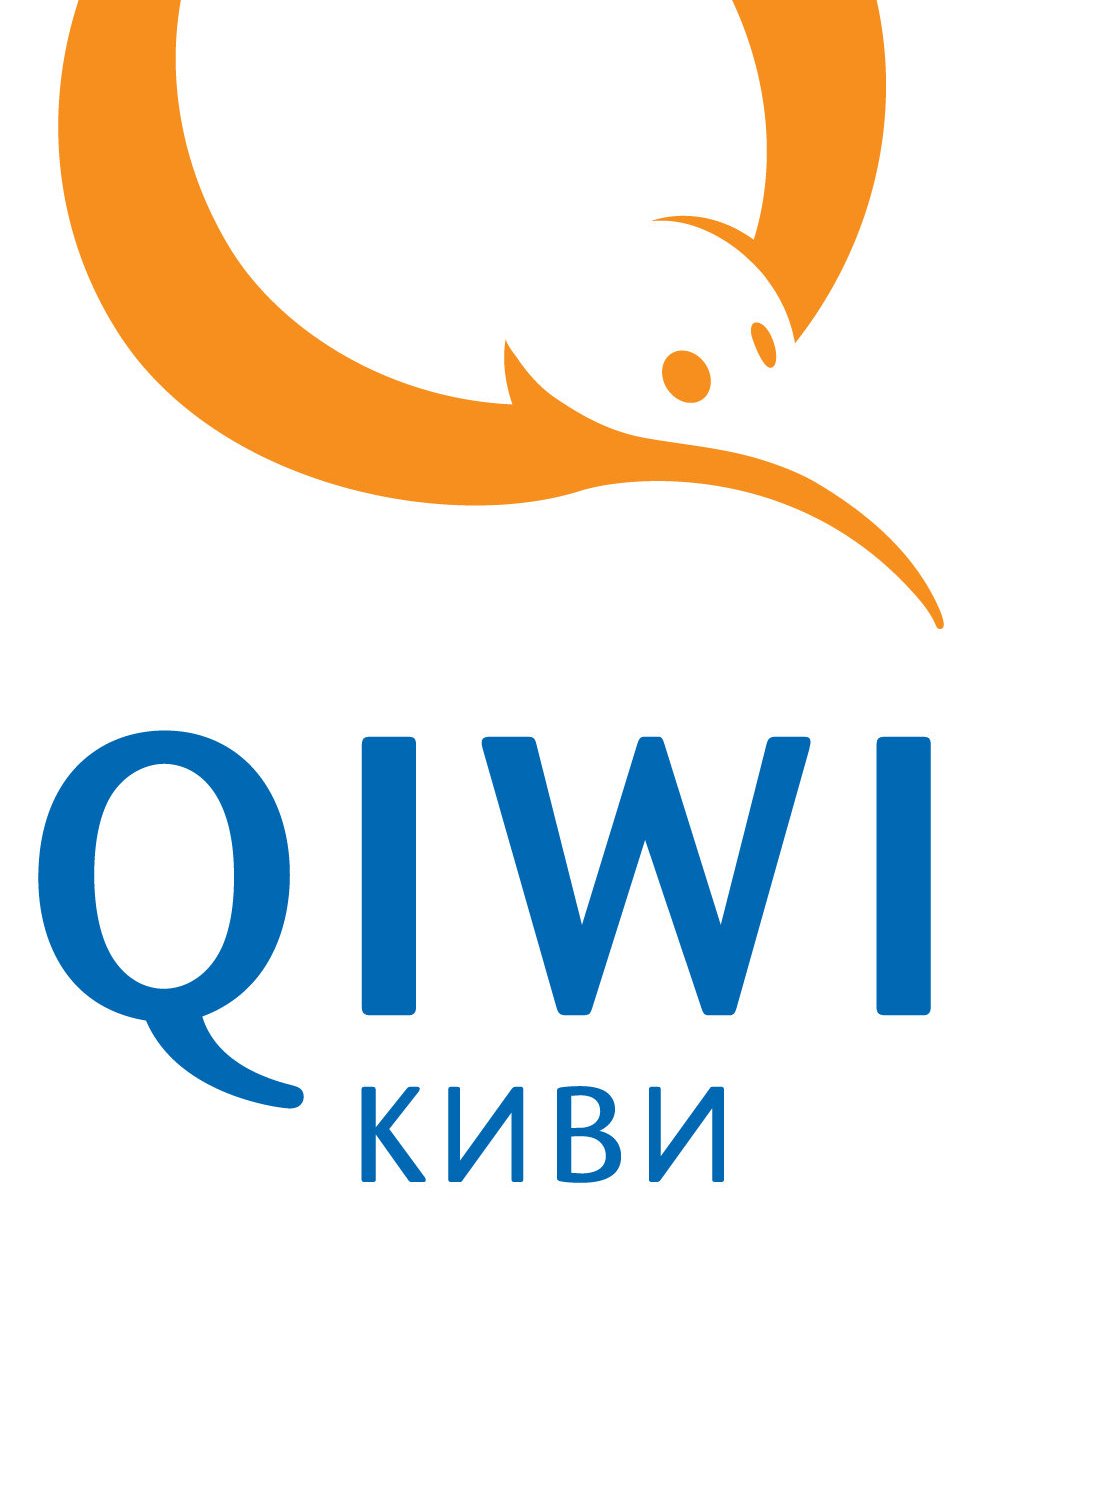 Электронный деньги киви кошелек. QIWI кошелек. QIWI логотип. Иконка киви кошелька. QIWI без фона.